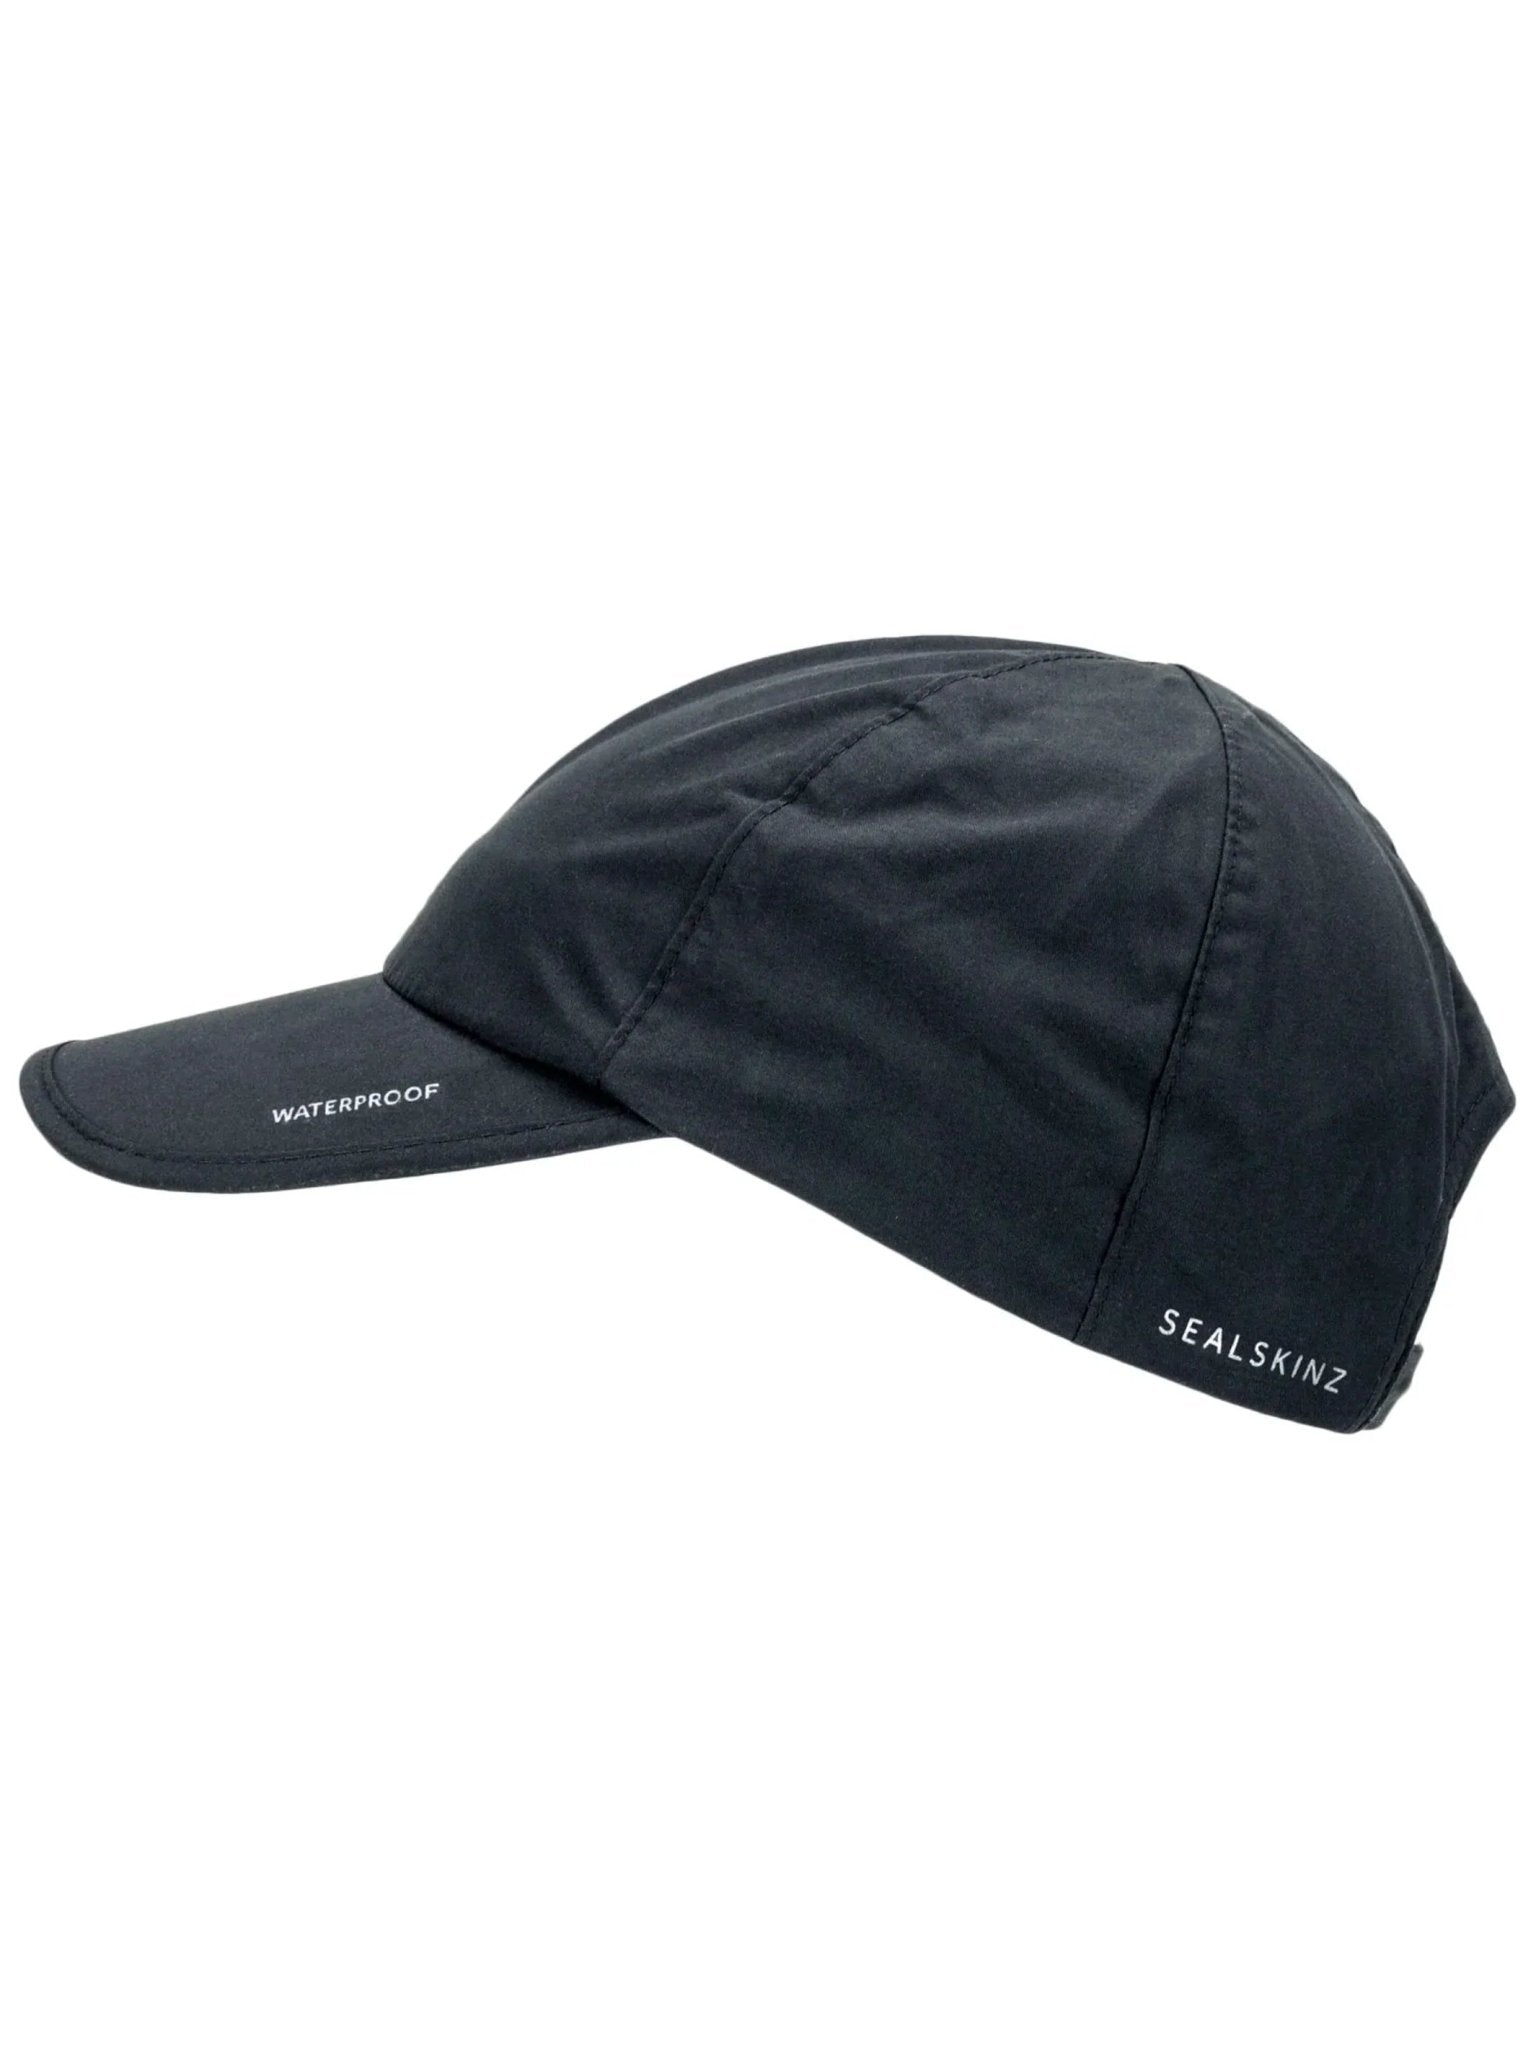 Sealskinz - Waterproof Windproof Hat / Peaked Cap / Baseball cap 